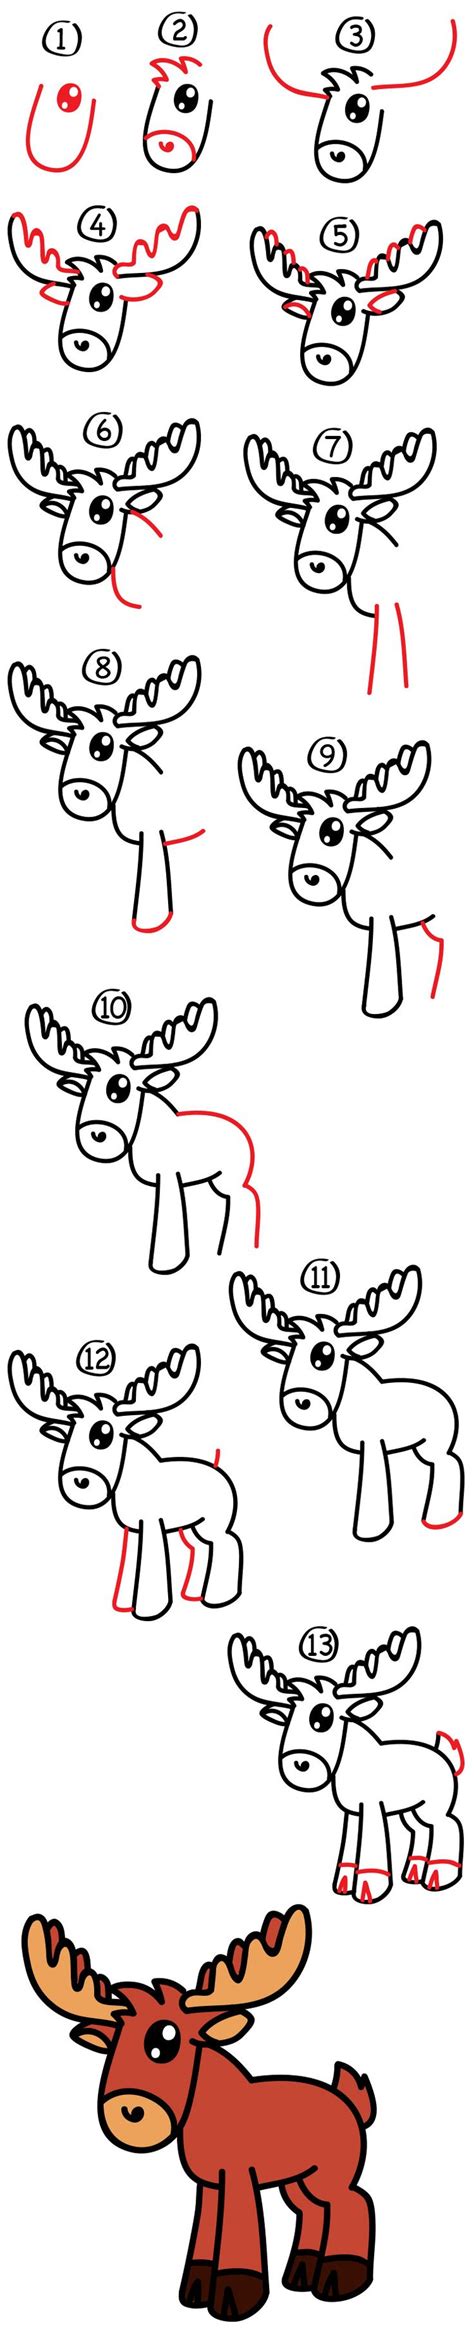 How To Draw A Cartoon Moose Art For Kids Hub Art For Kids Hub